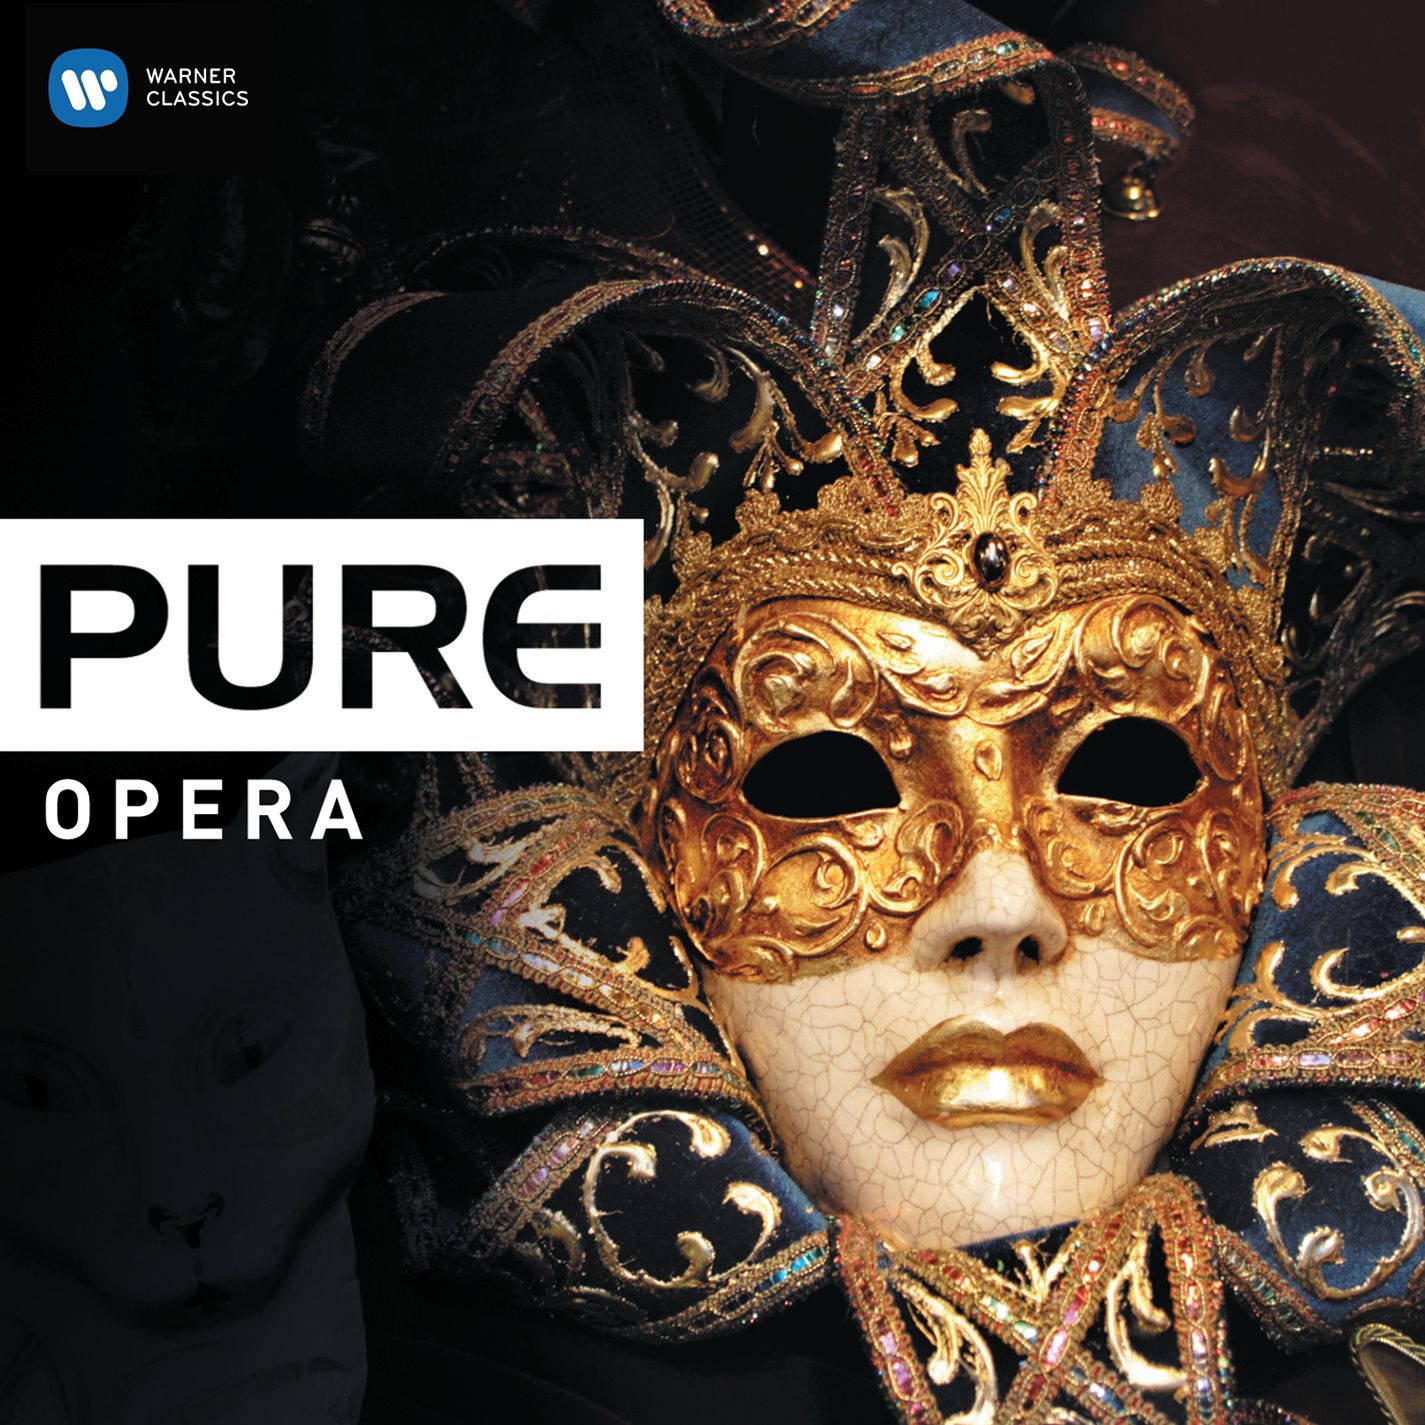 Pure Opera